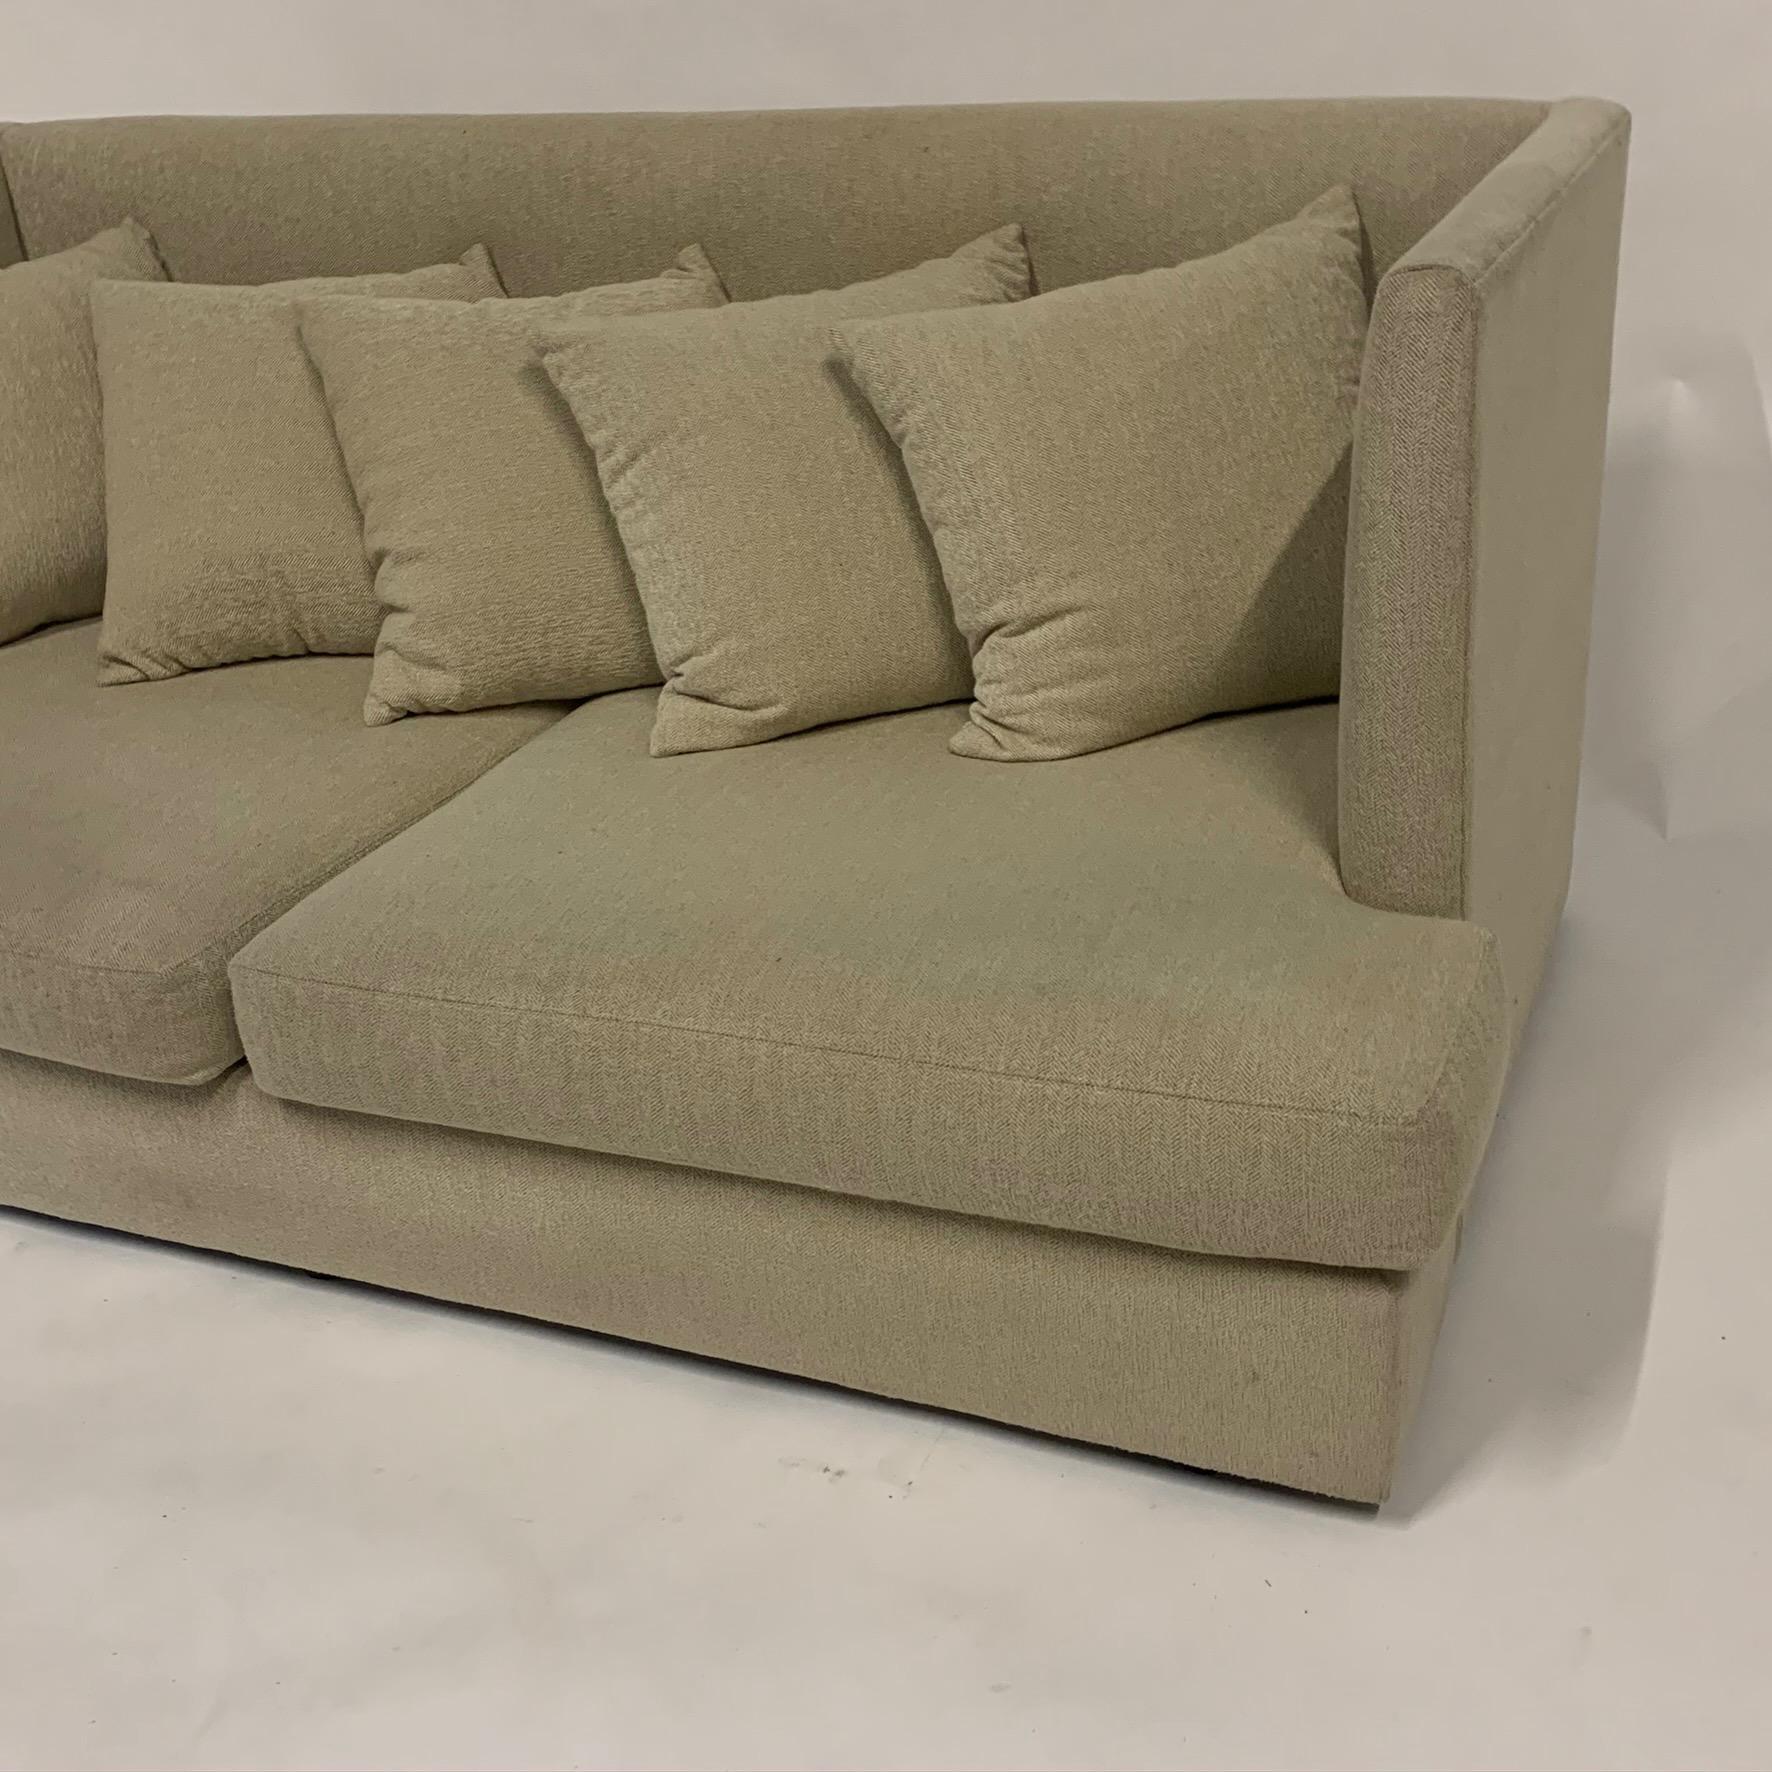 American Stunning Milo Baughman Shelter Sofa w Down Pillows- Very Comfortable